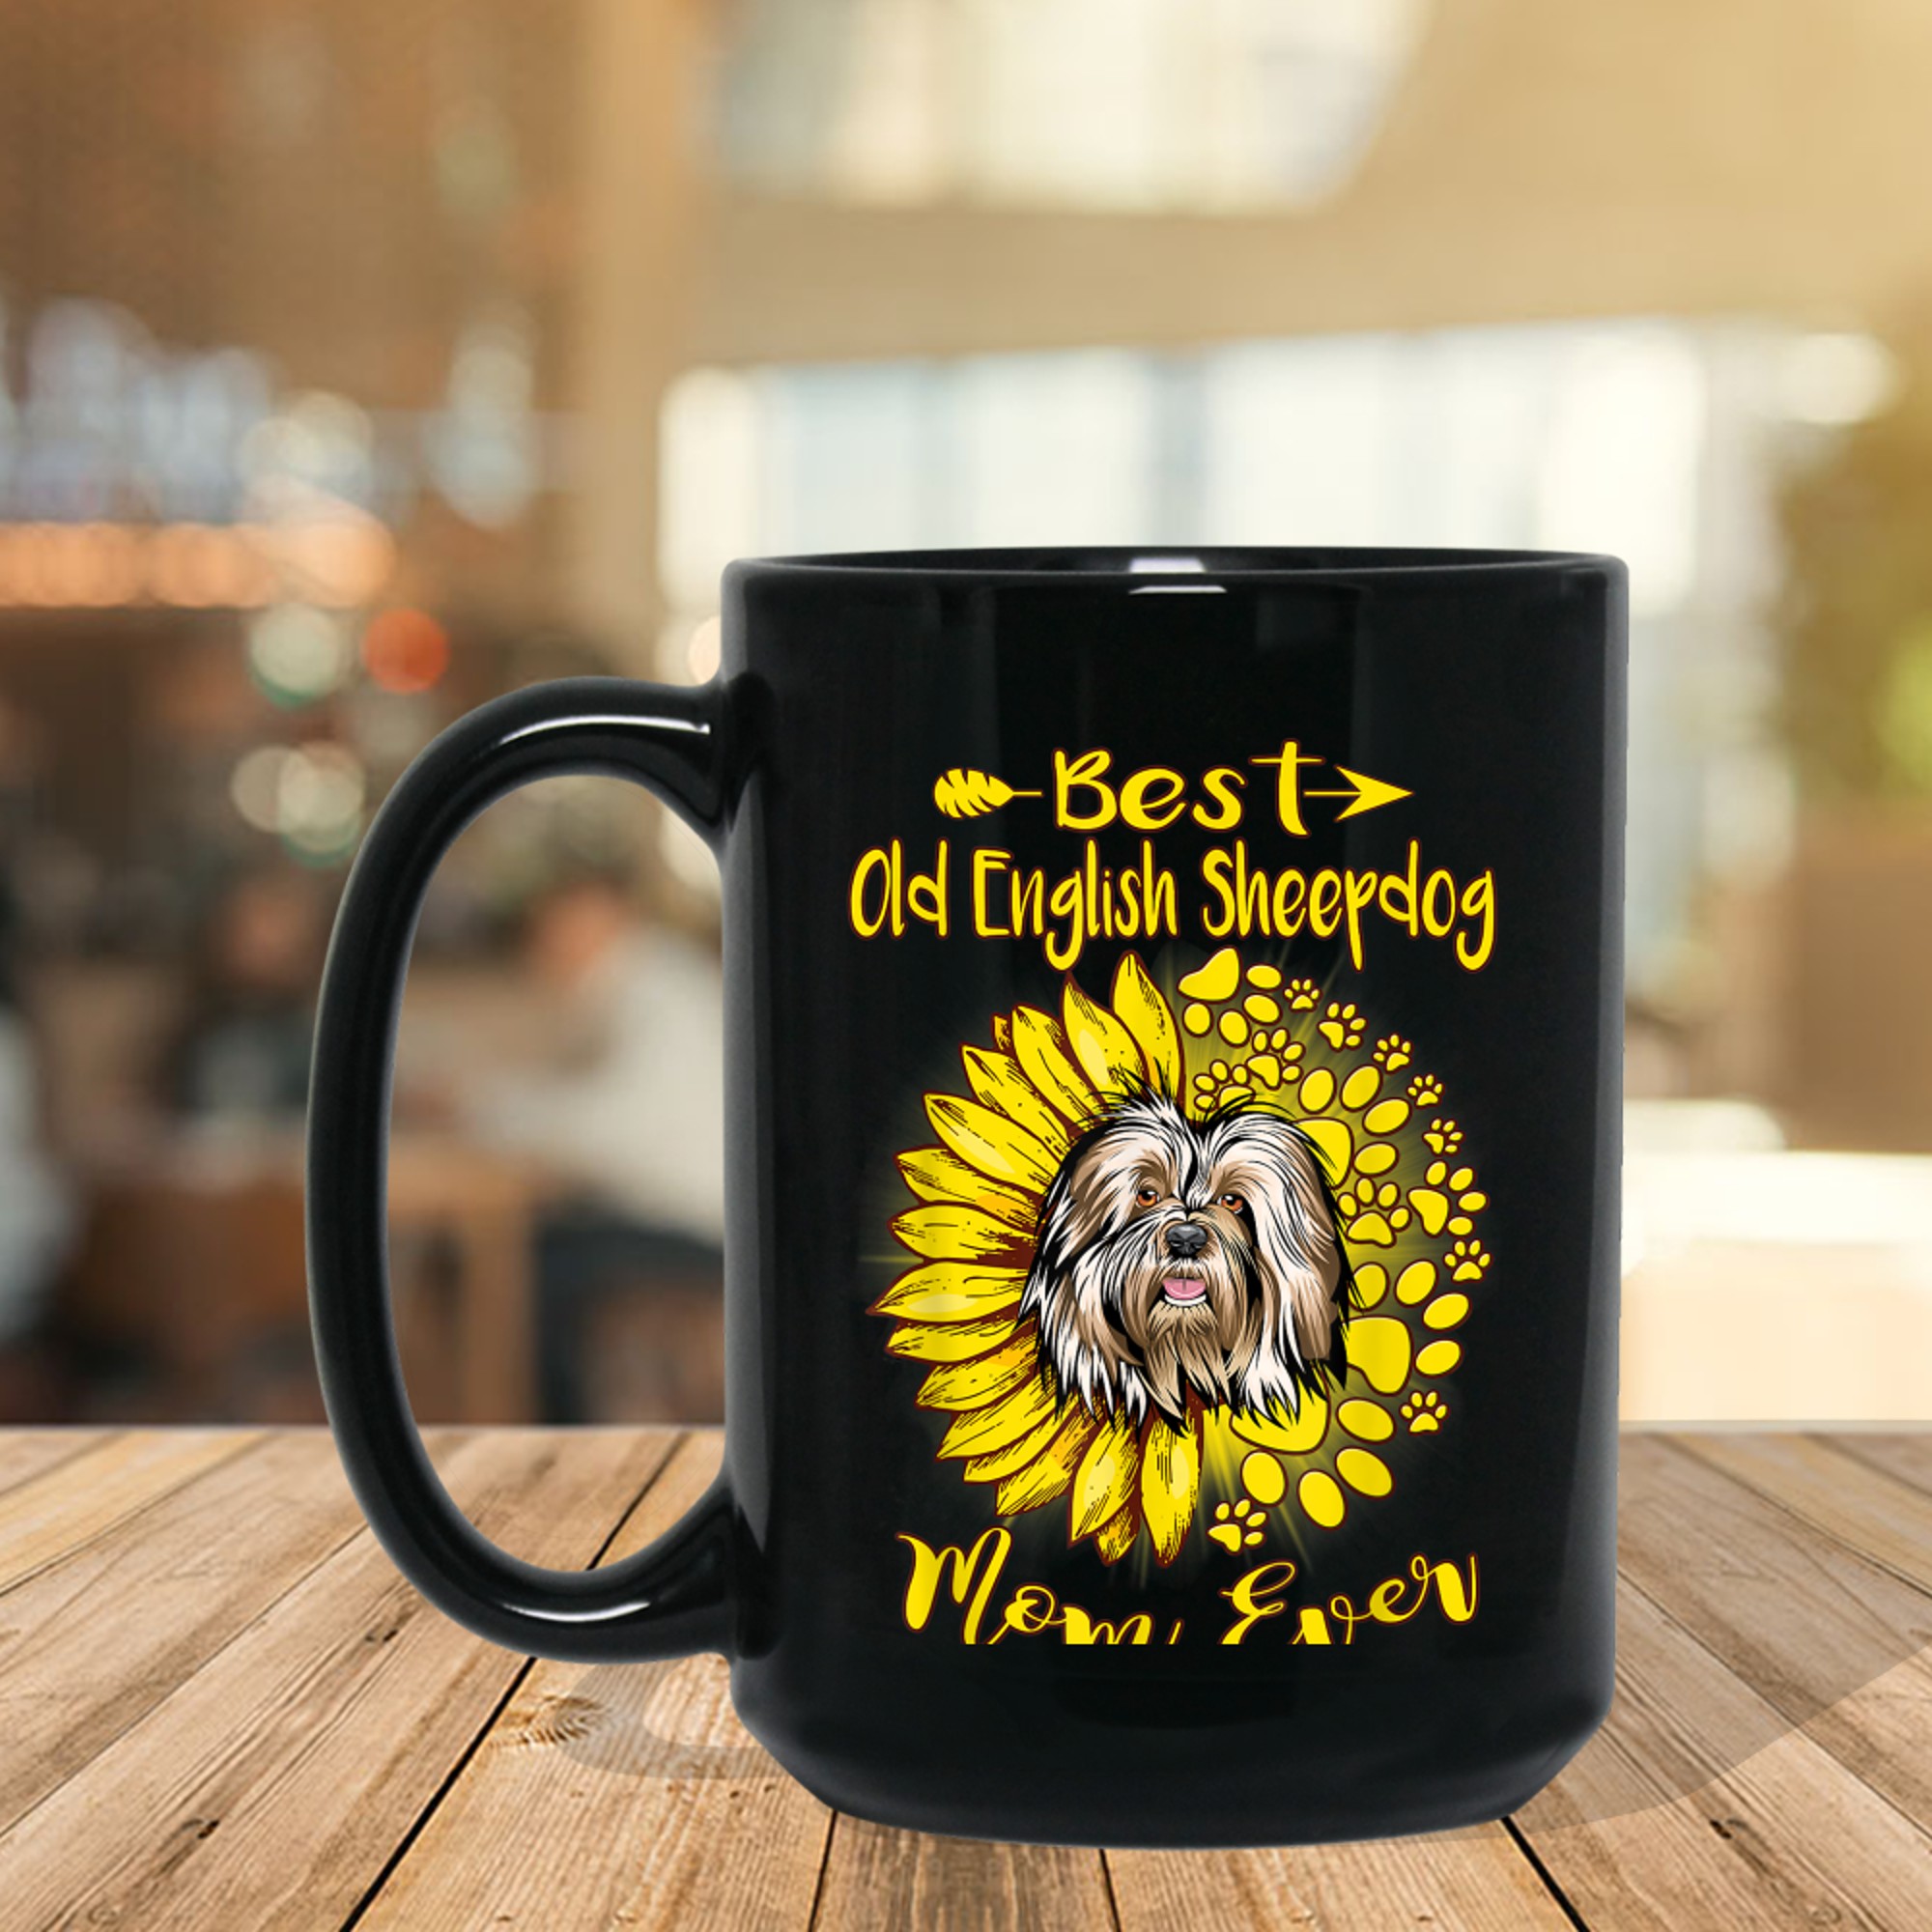 Best Old English Sheepdog Dog Mom Ever Sunflower Funny Dogs mug black